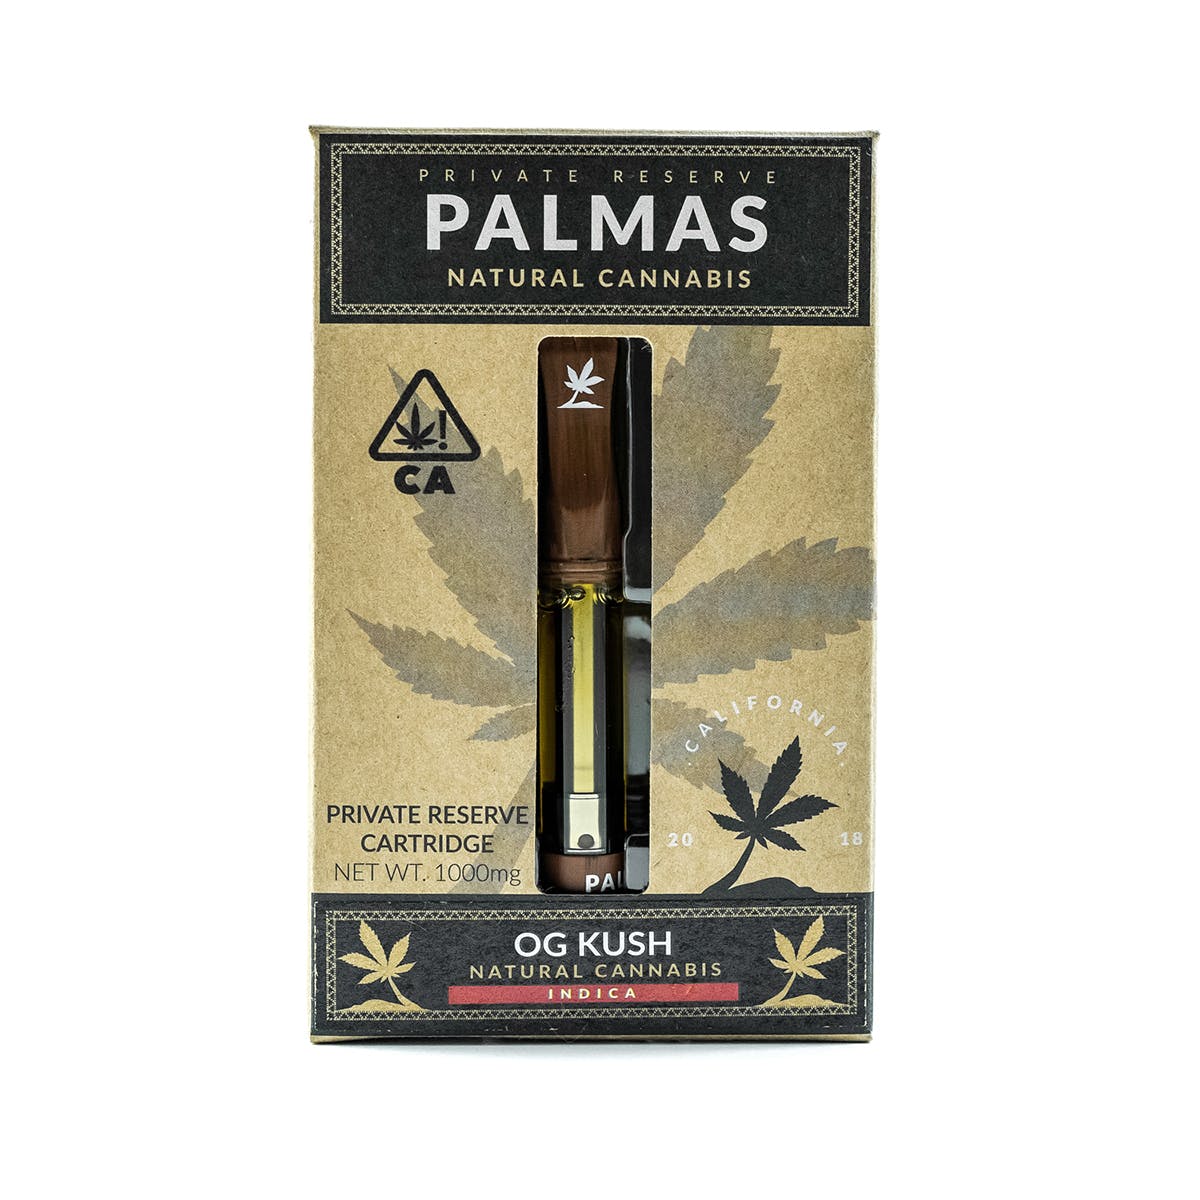 marijuana-dispensaries-straight-up-20-in-compton-palmas-private-reserve-cartridge-og-kush